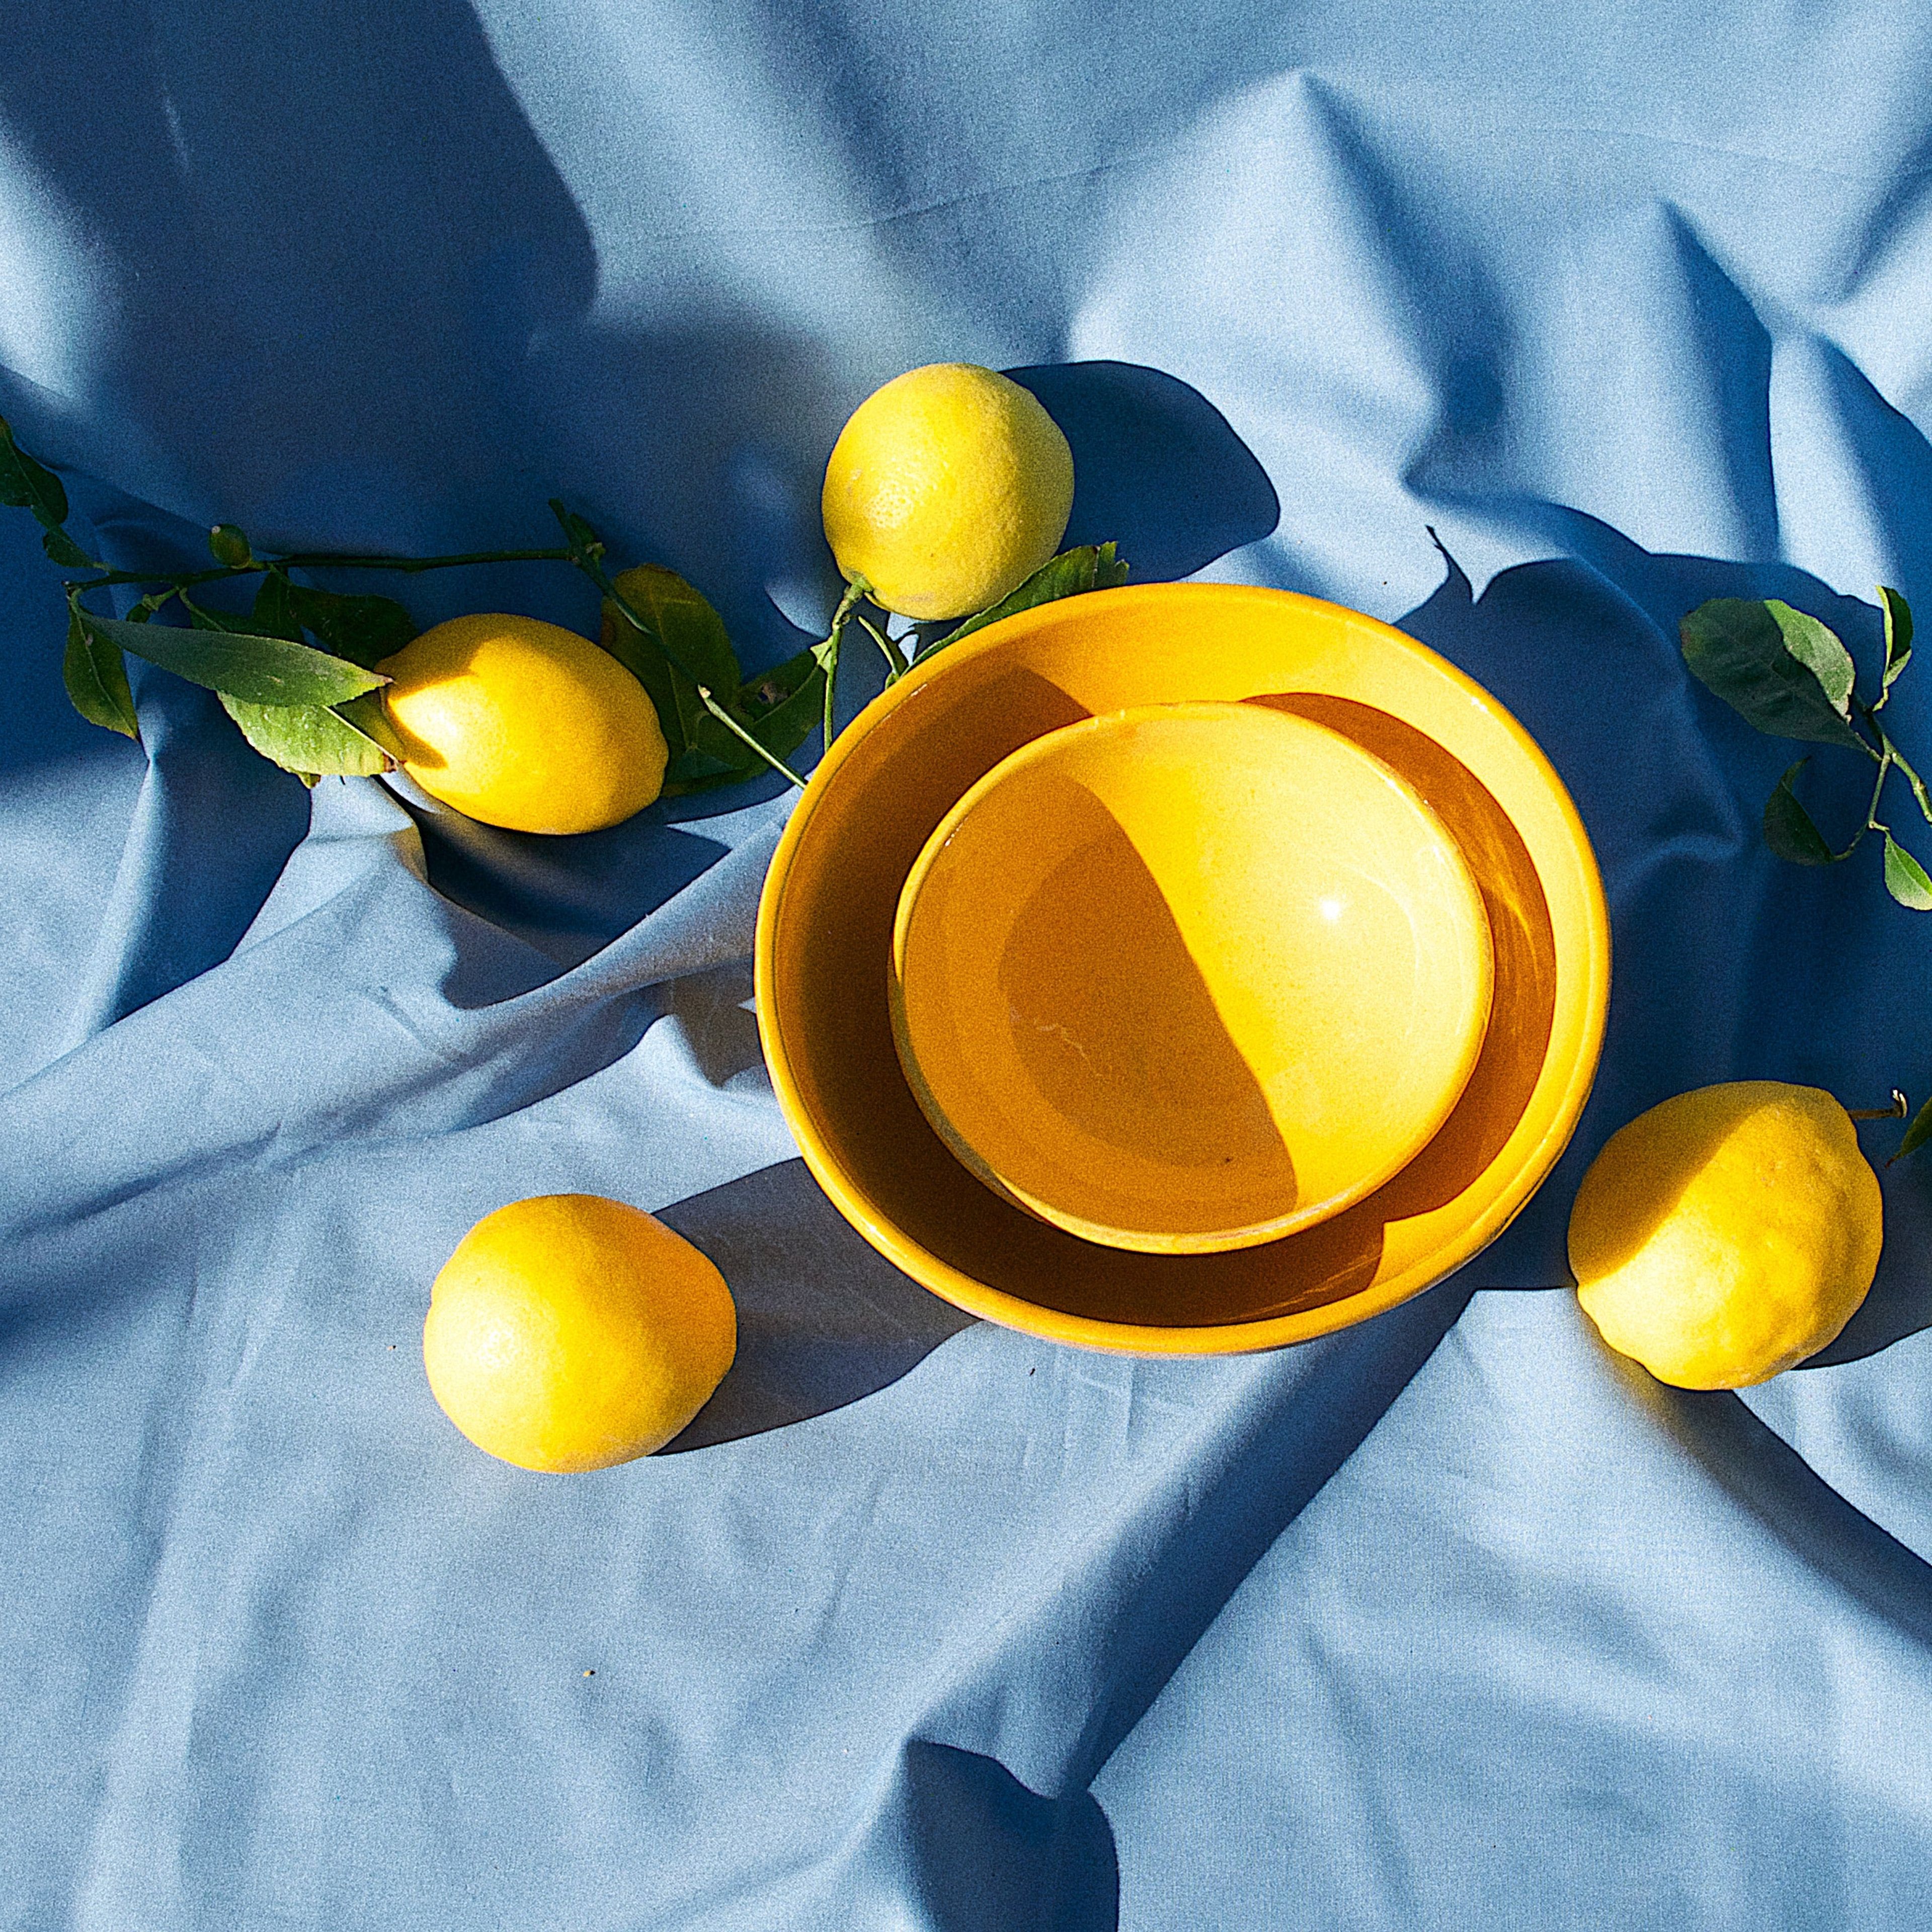 Medium bowl with yellow glaze